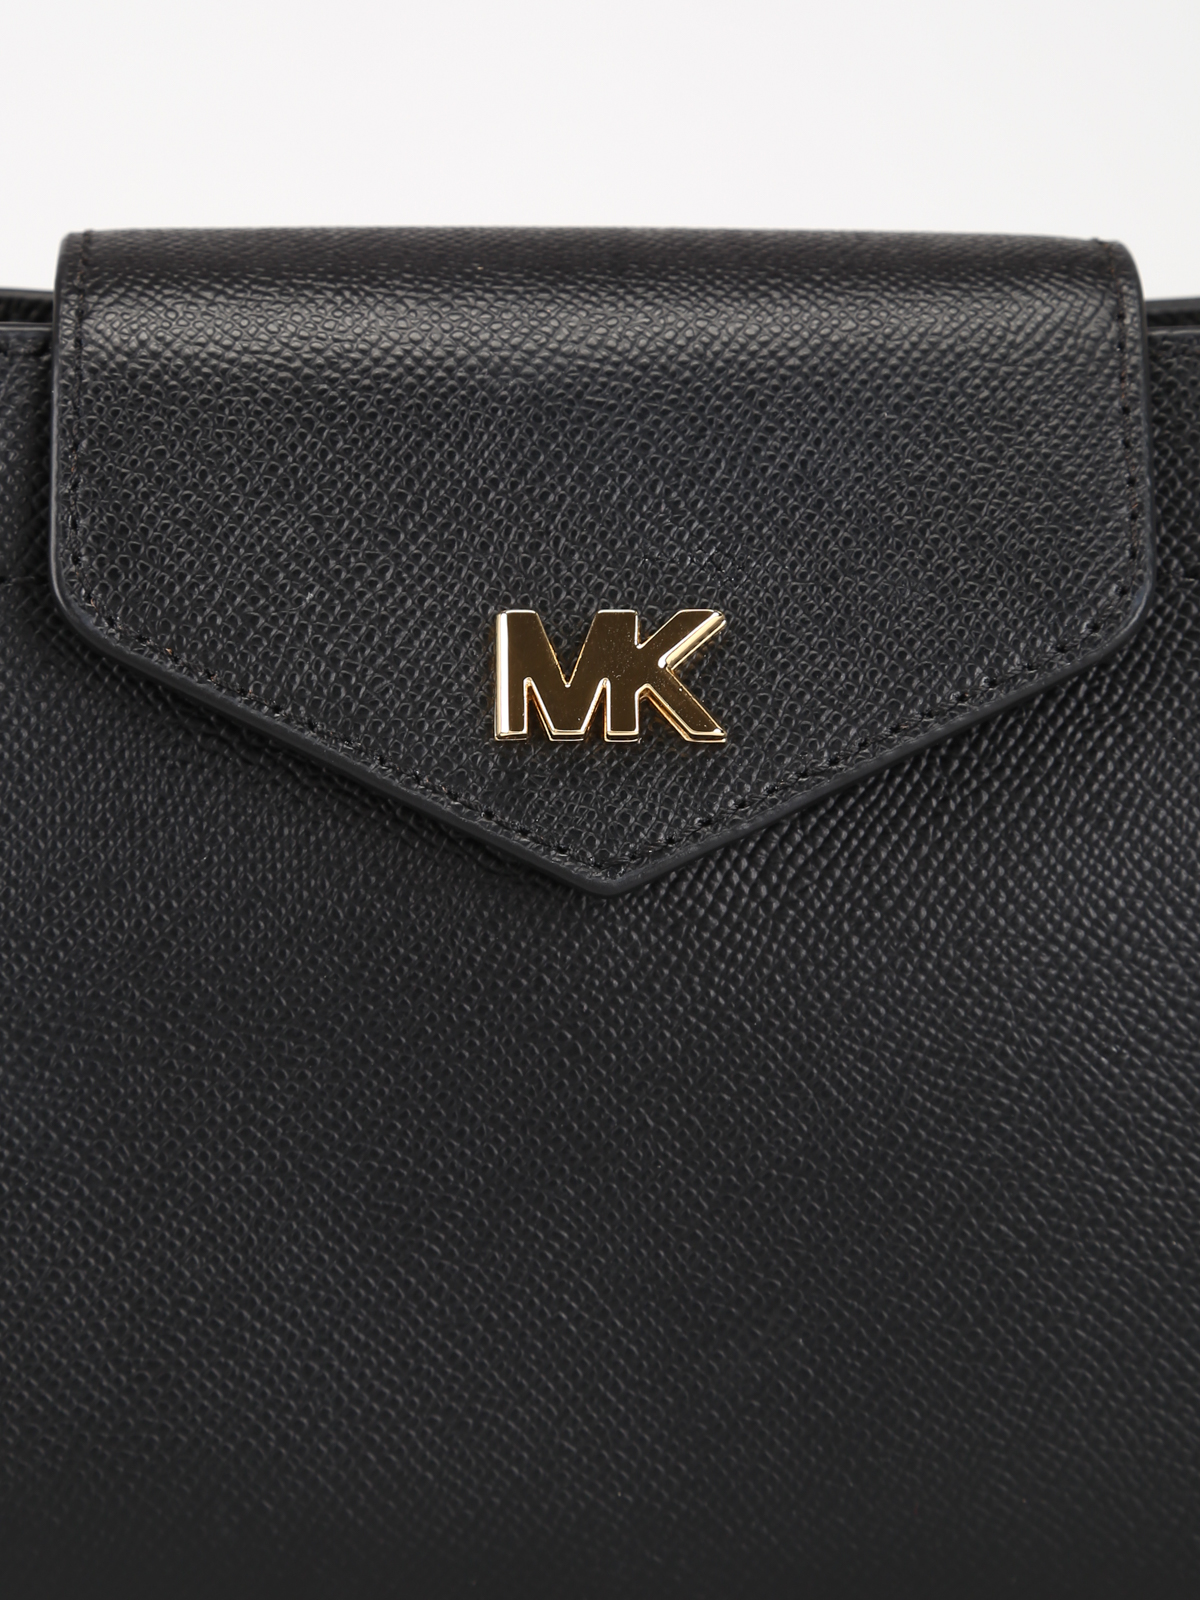 Clutches Michael Kors - Black leather medium crossbody clutch ...